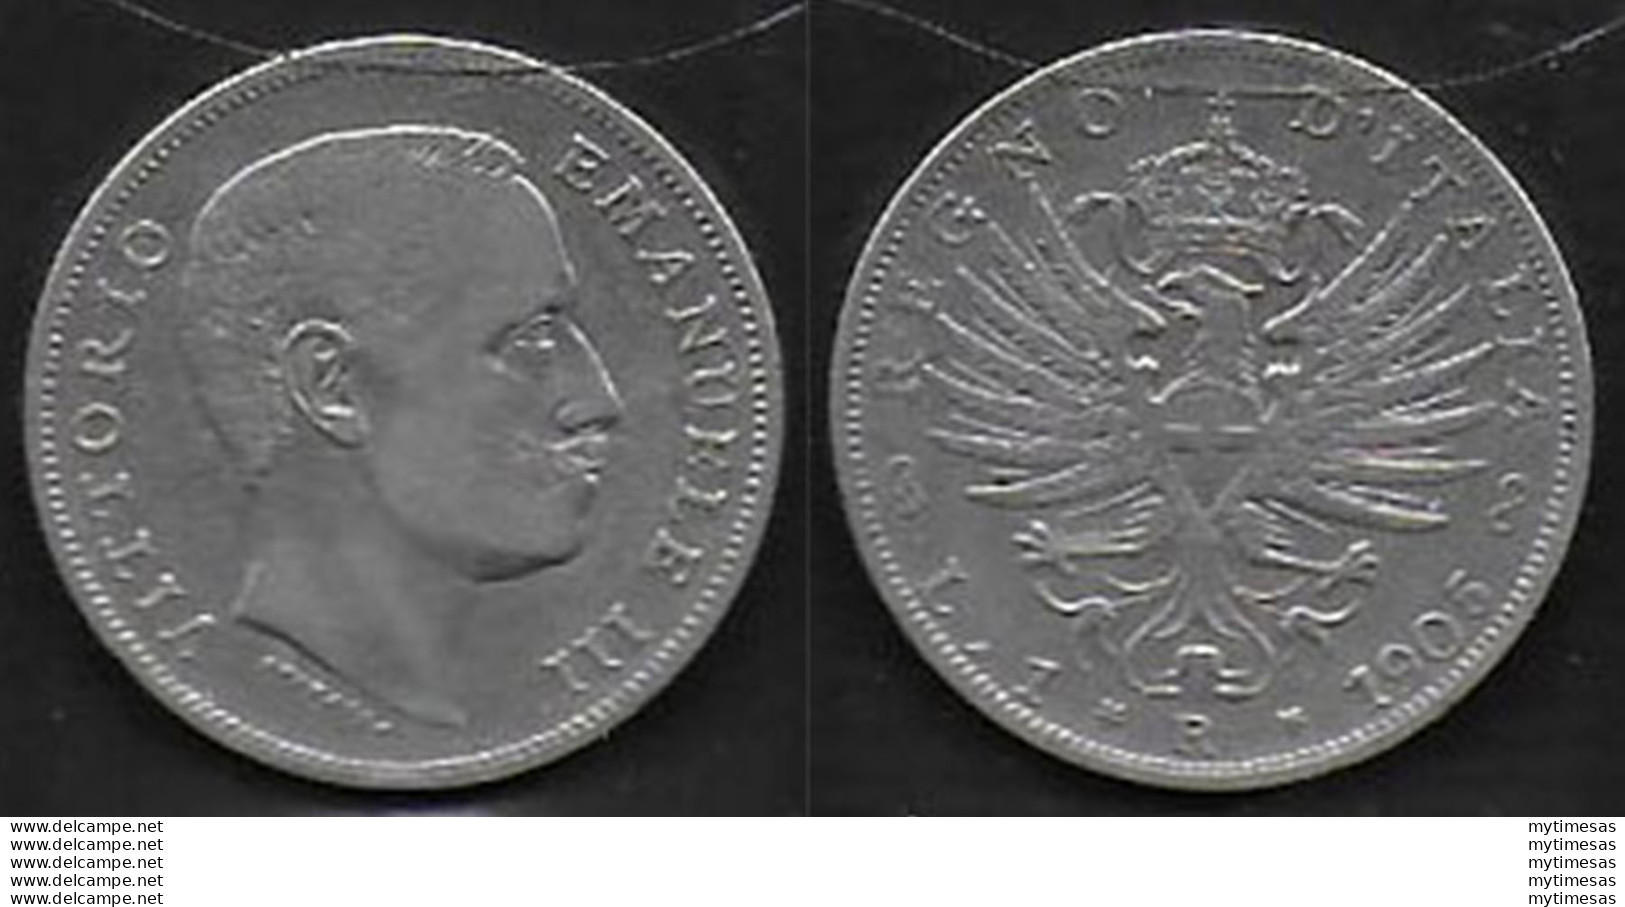 1905 Lire 1 QBB Aquila Sabauda Argento - 1900-1946 : Víctor Emmanuel III & Umberto II